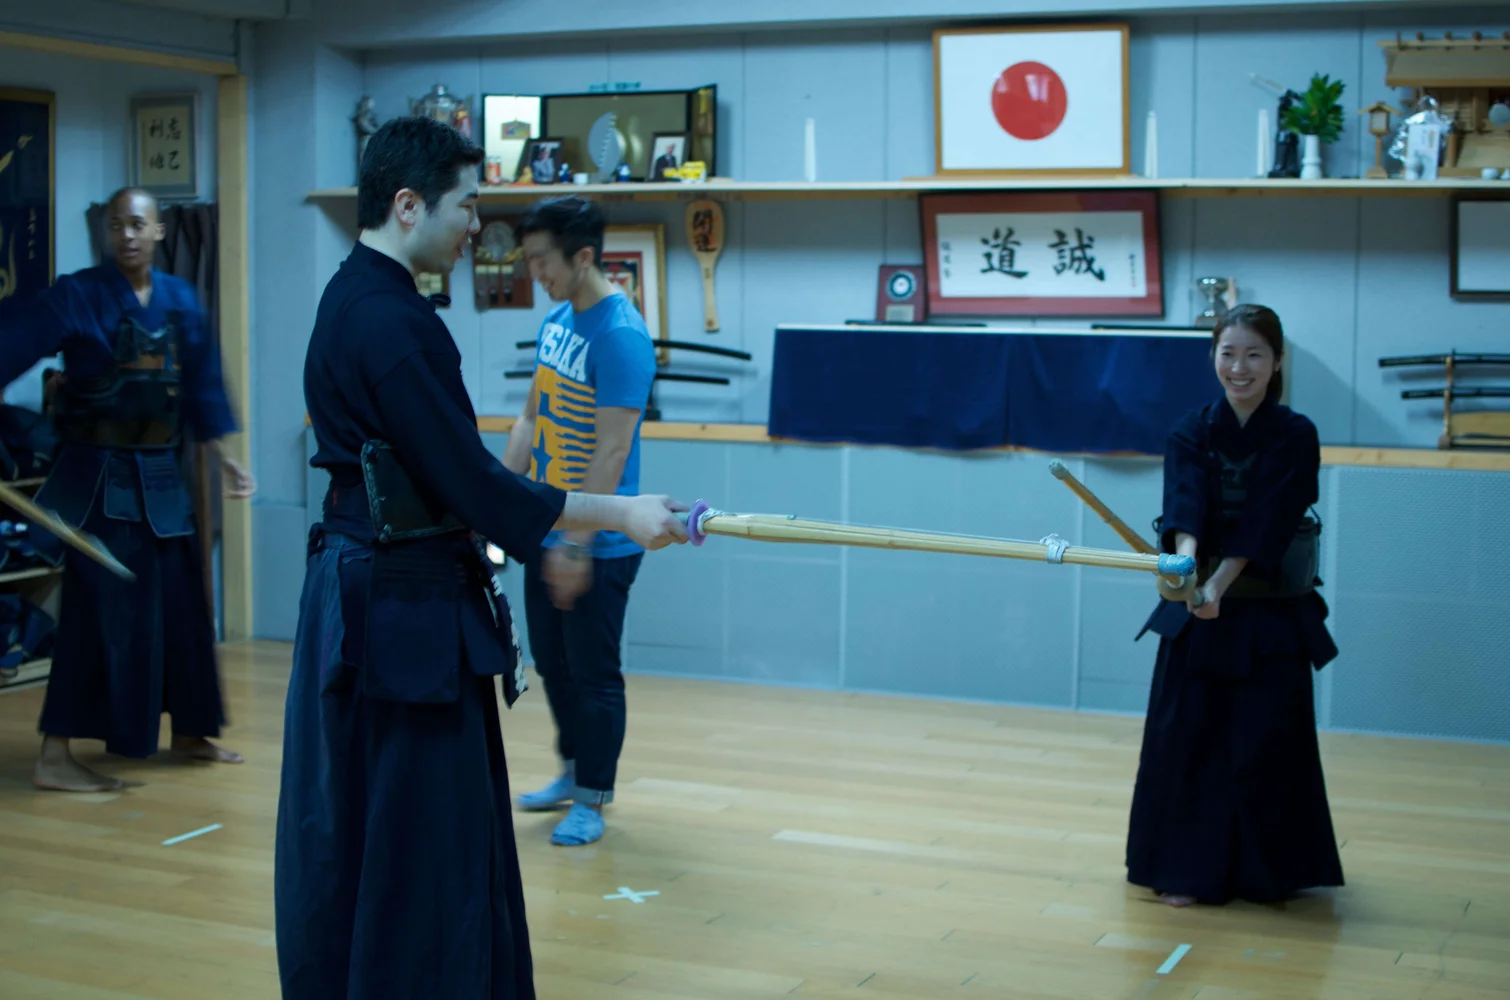 Practice Kendo, a Genuine Samurai experience in Tokyo